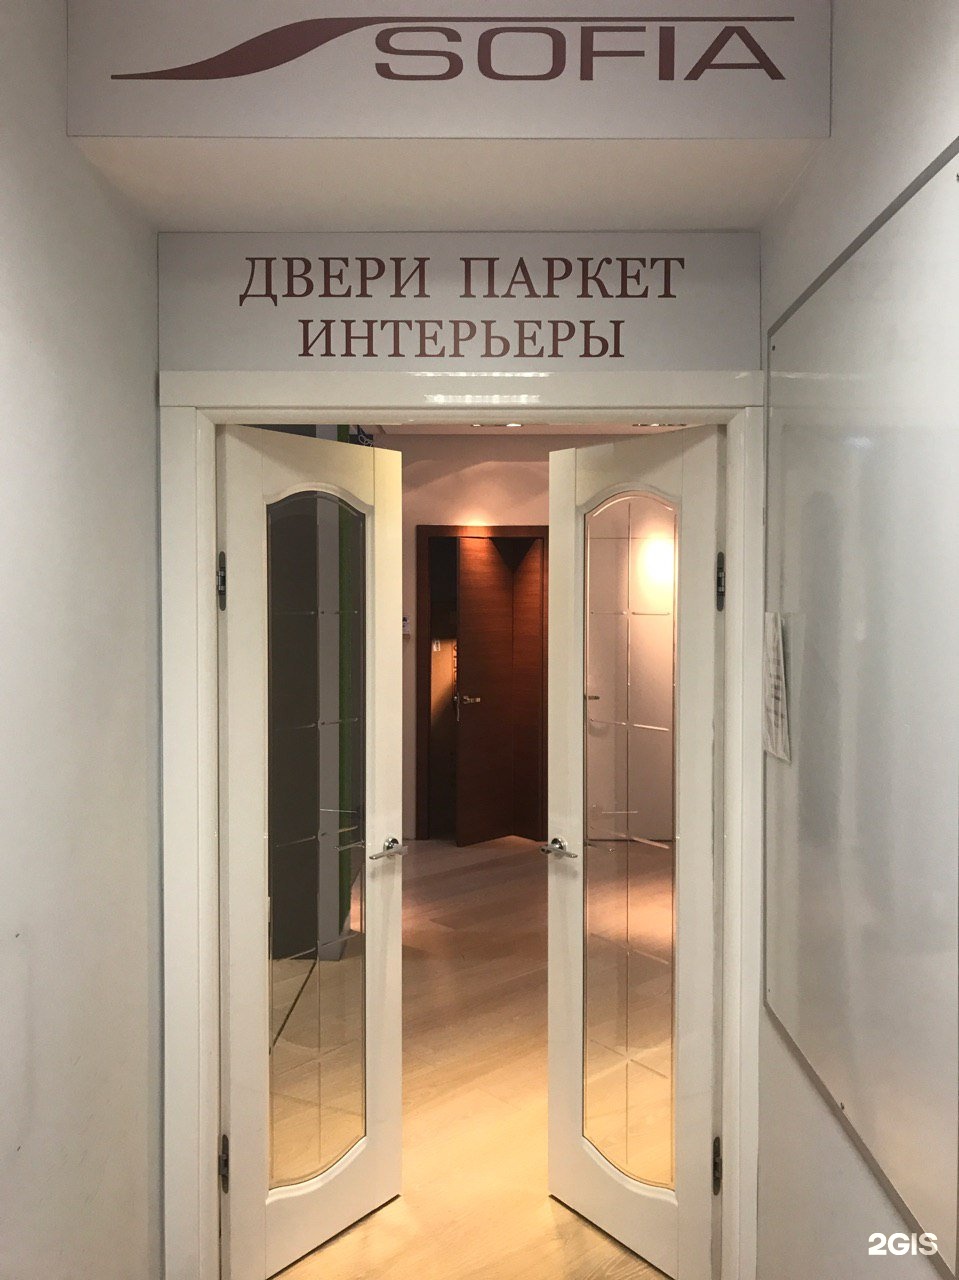 Салон дверей Sofia